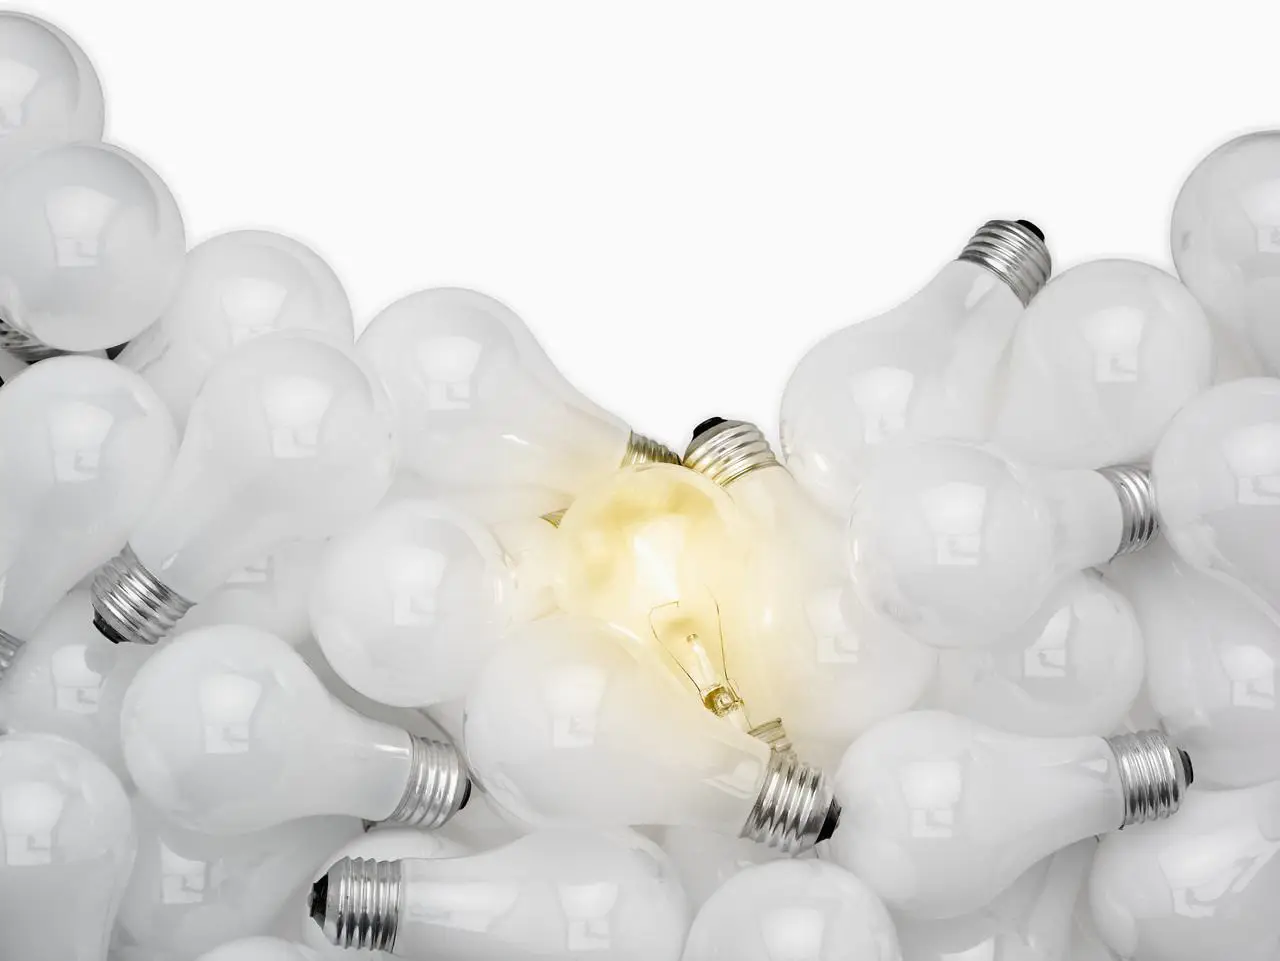 light bulbs with one lit - new ideas